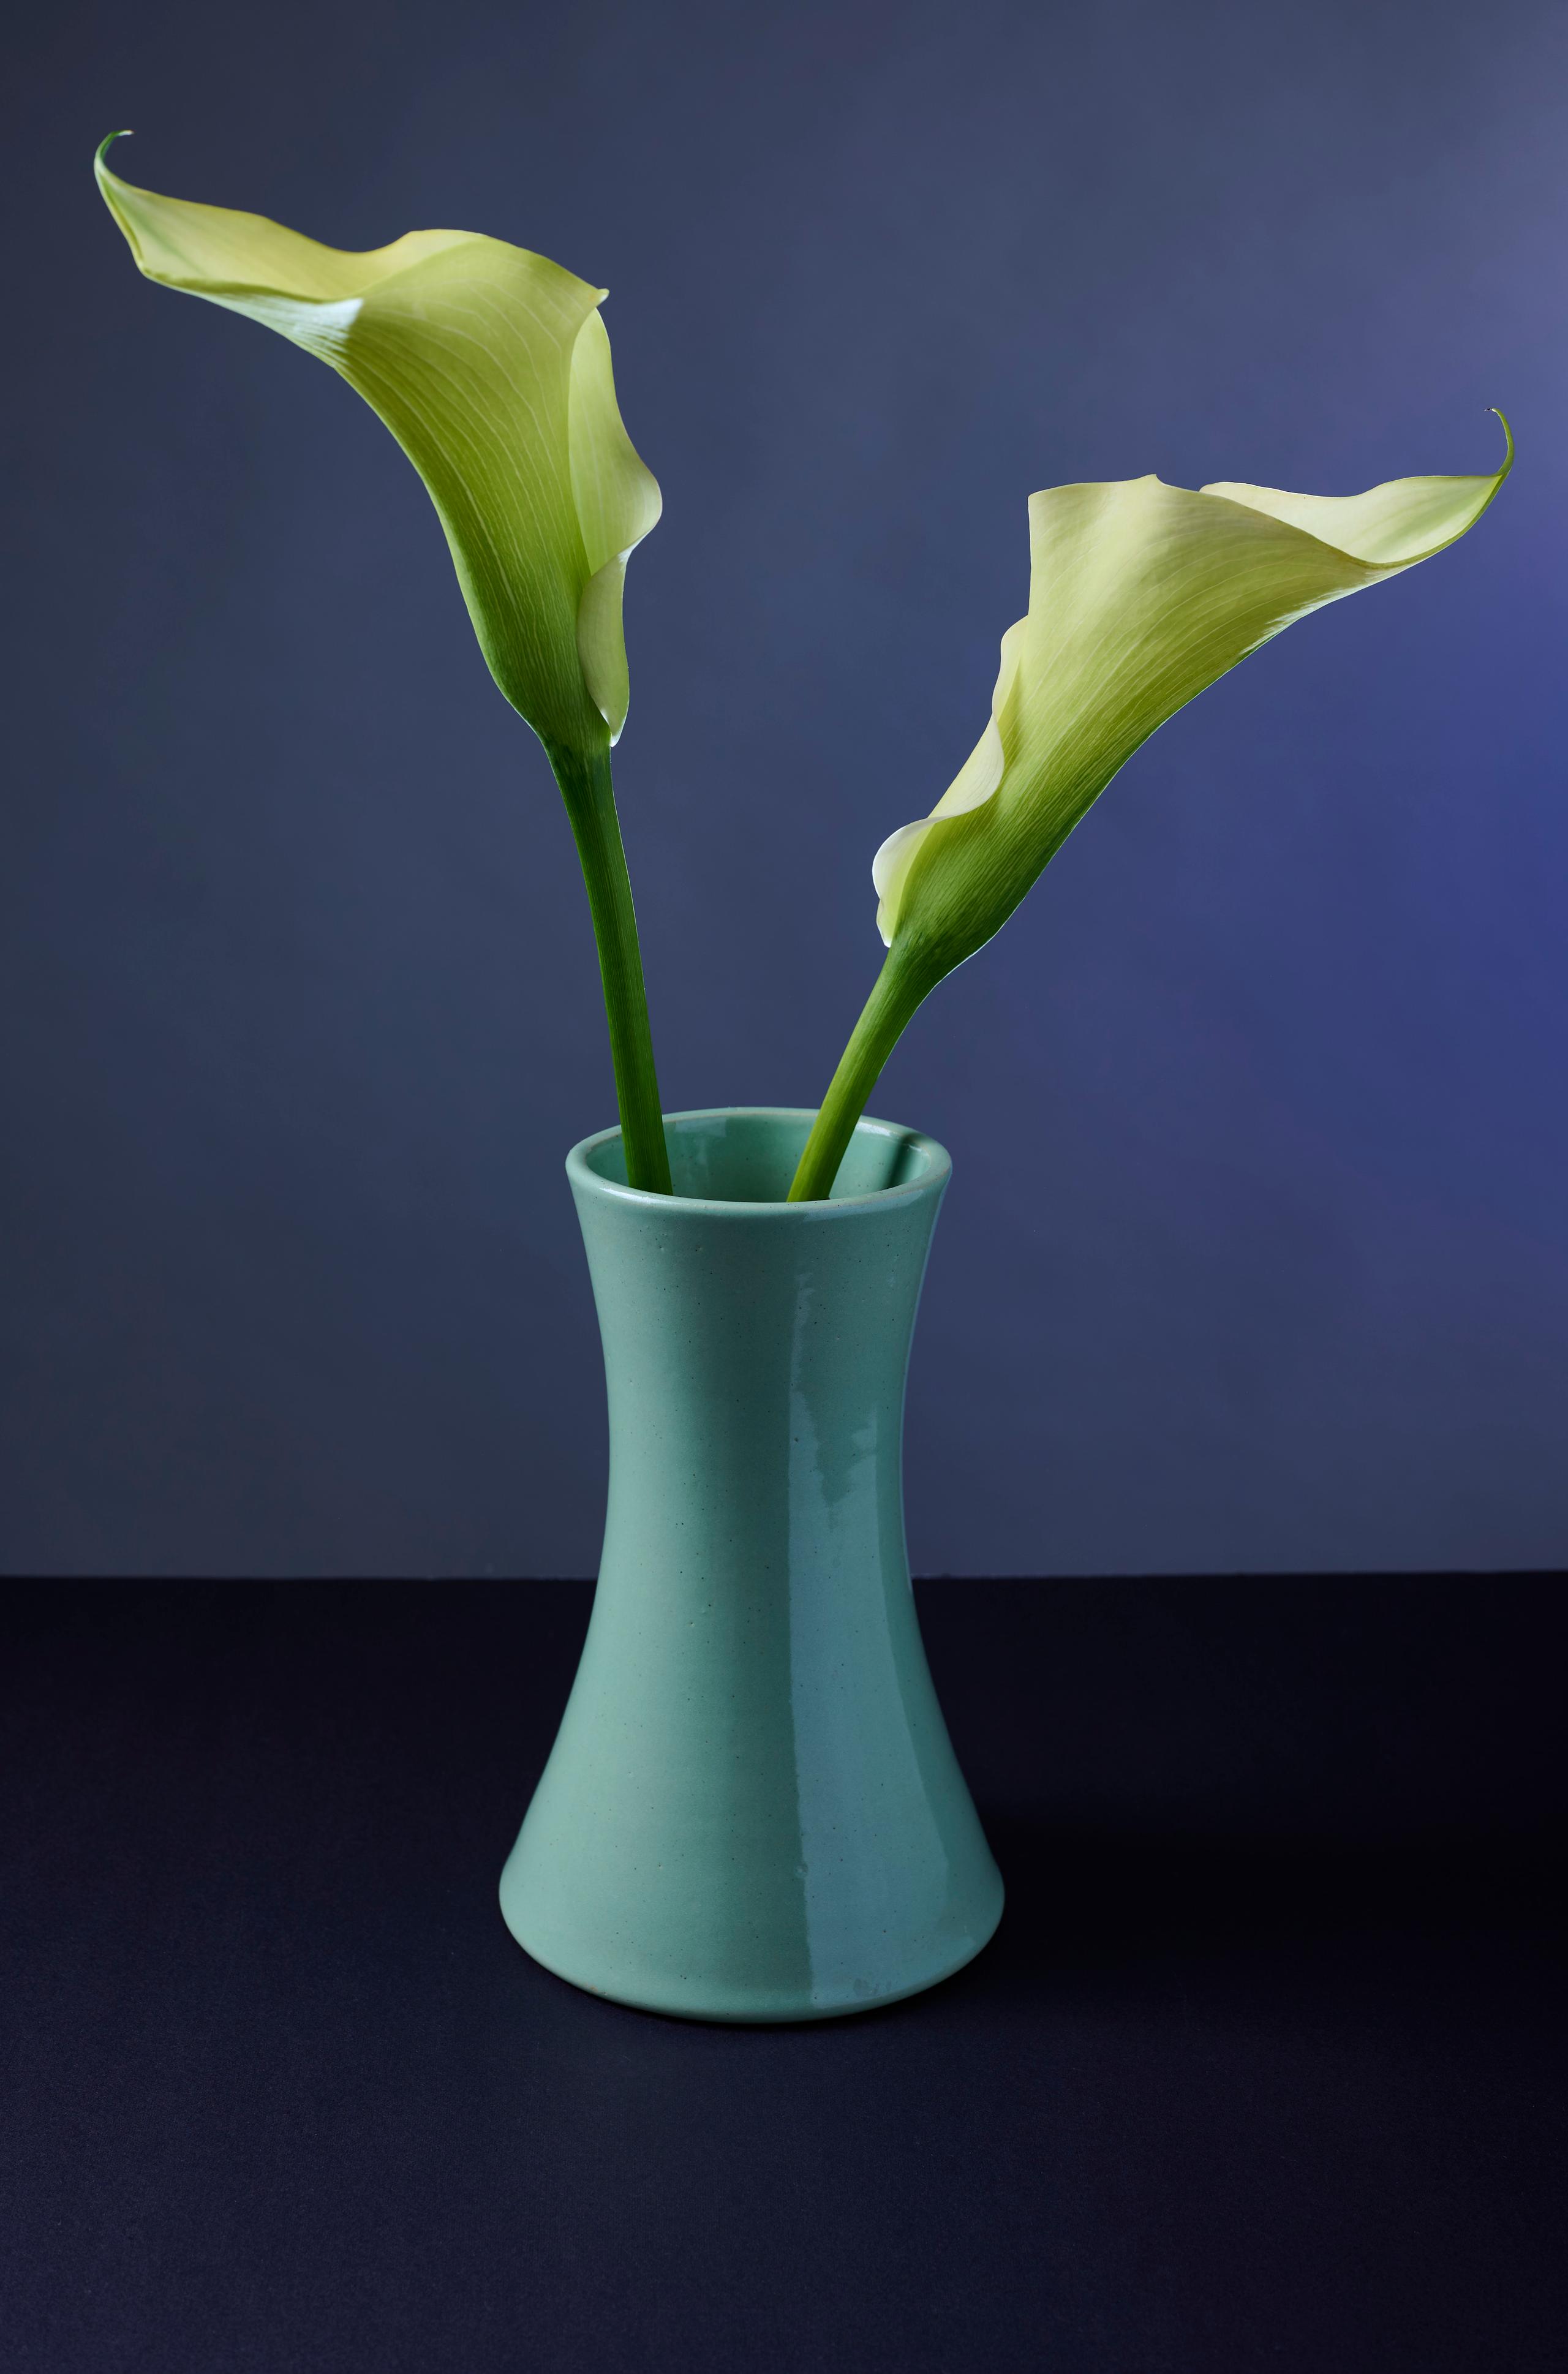 Photo Art No.2 Lilies in Vase. 16x10.5 inch.